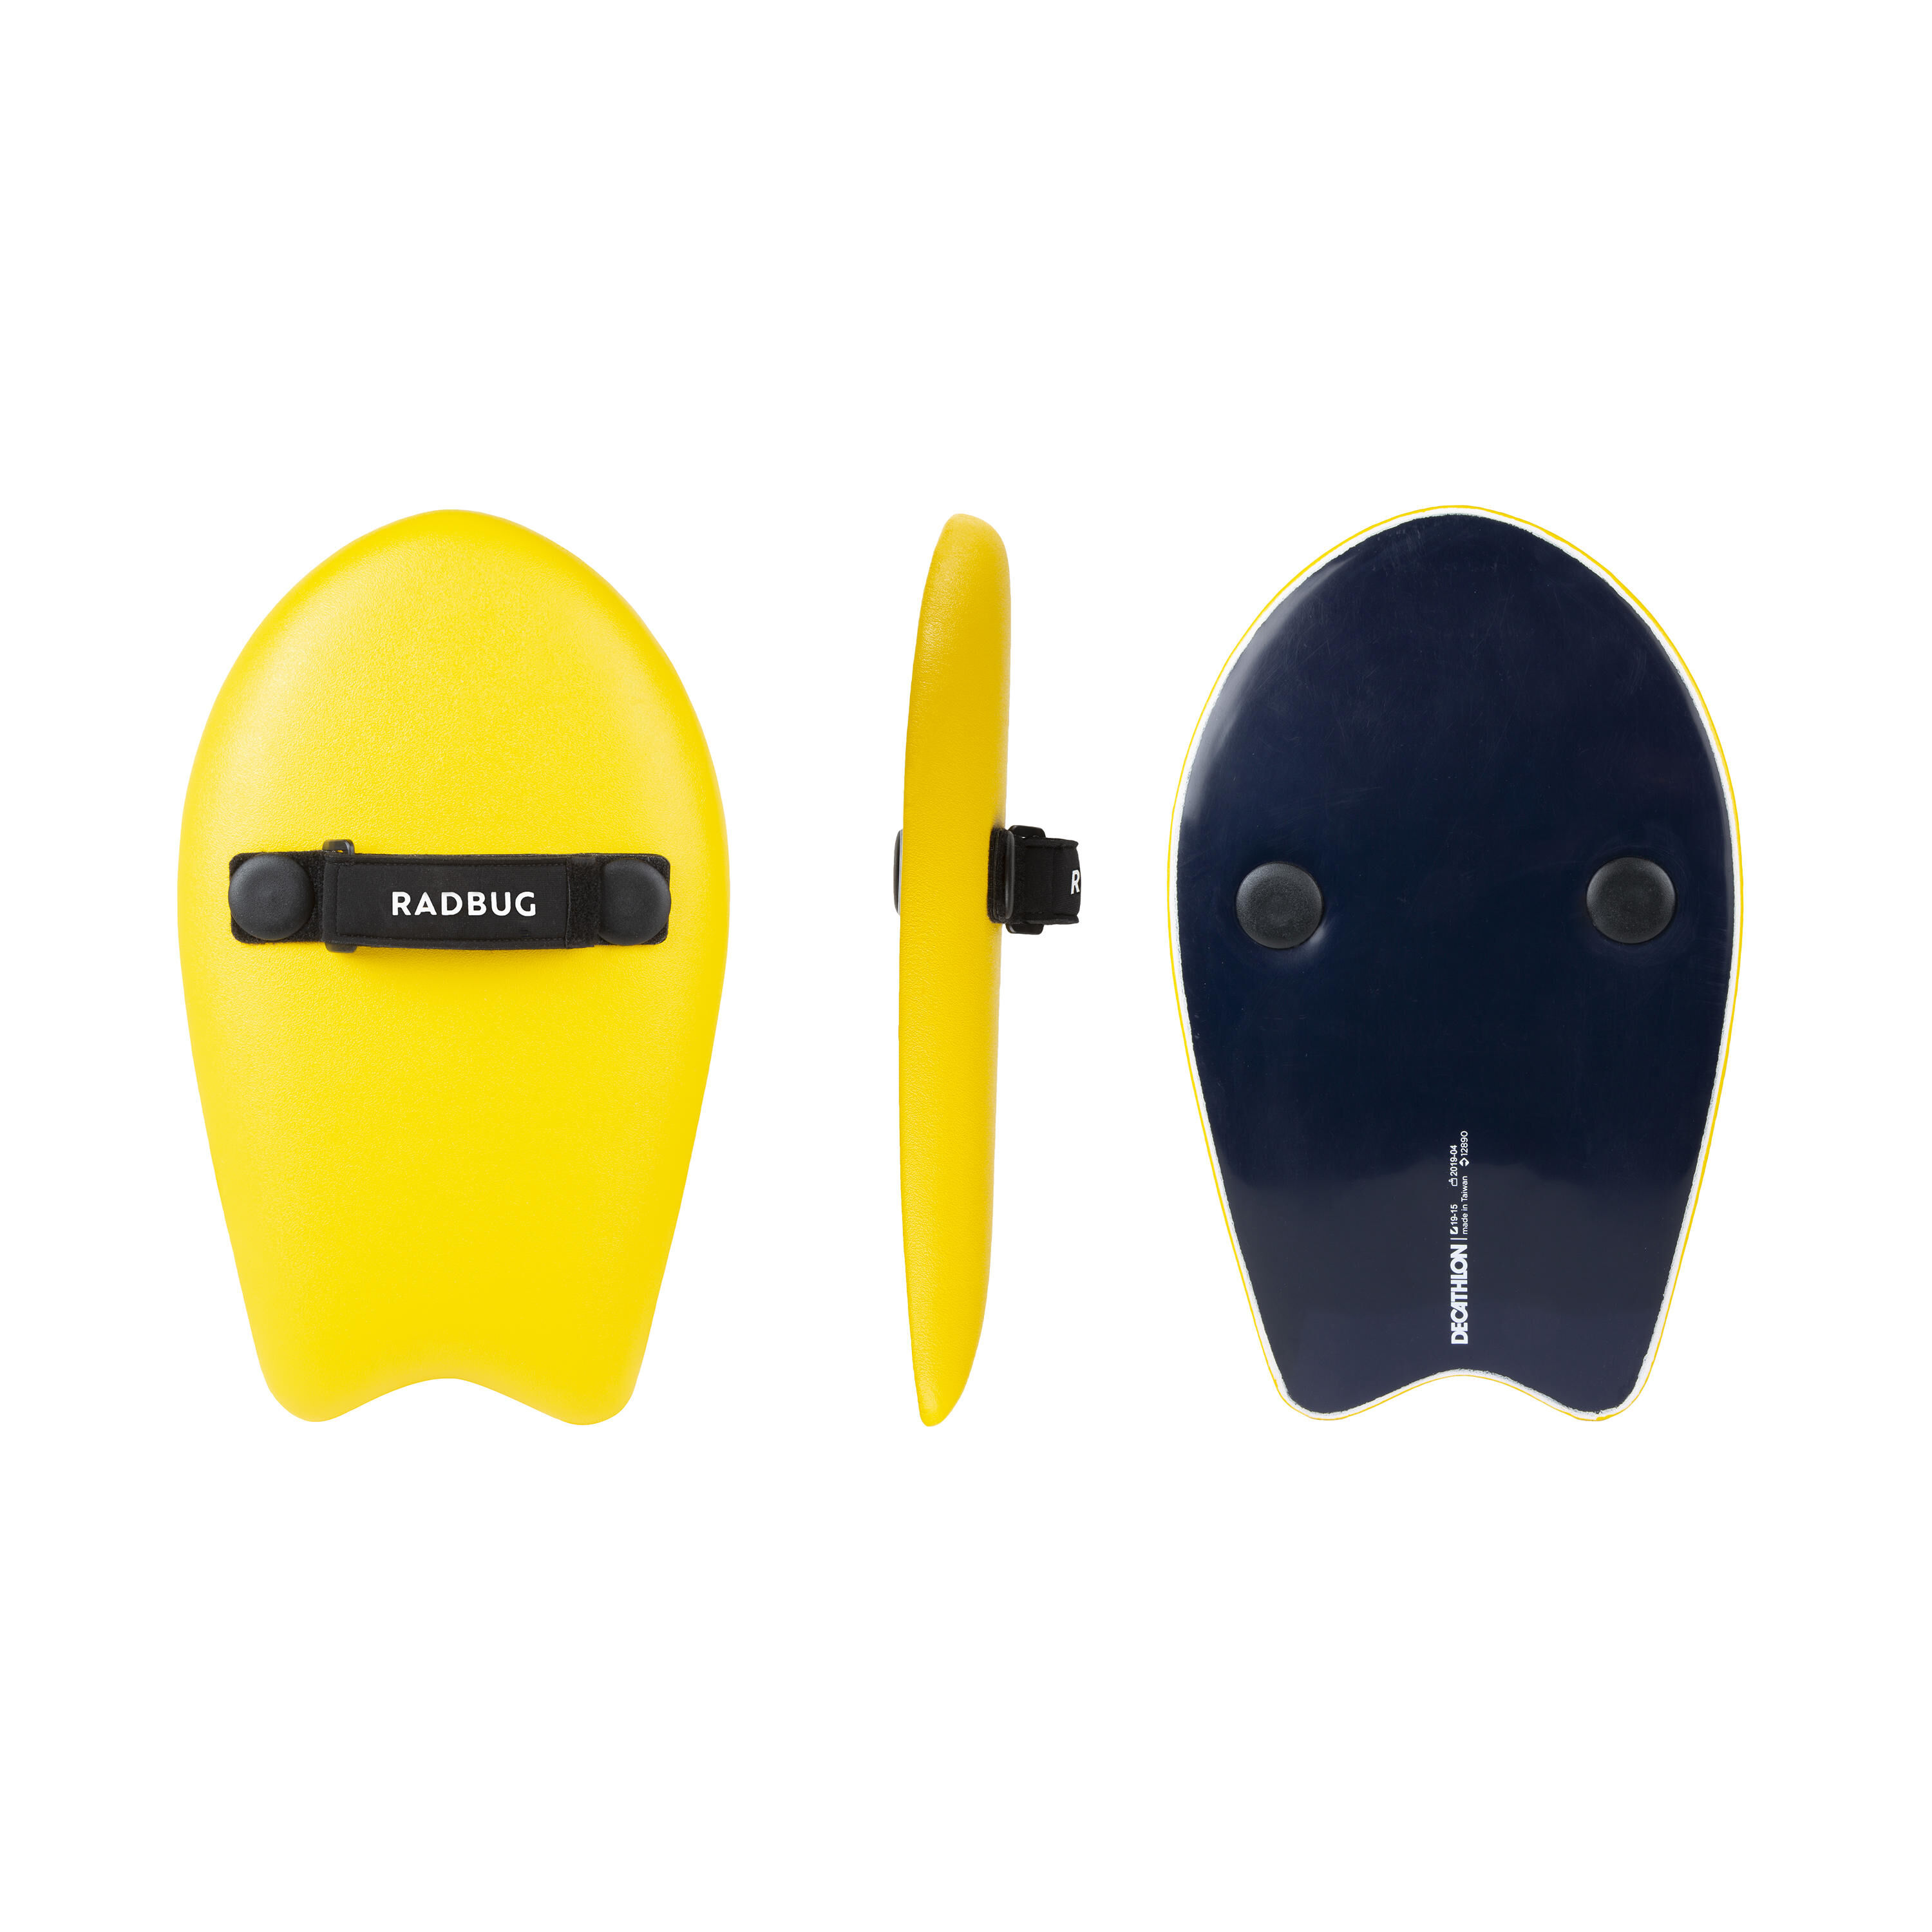 RADBUG Bodysurfing Handplane board 100 yellow